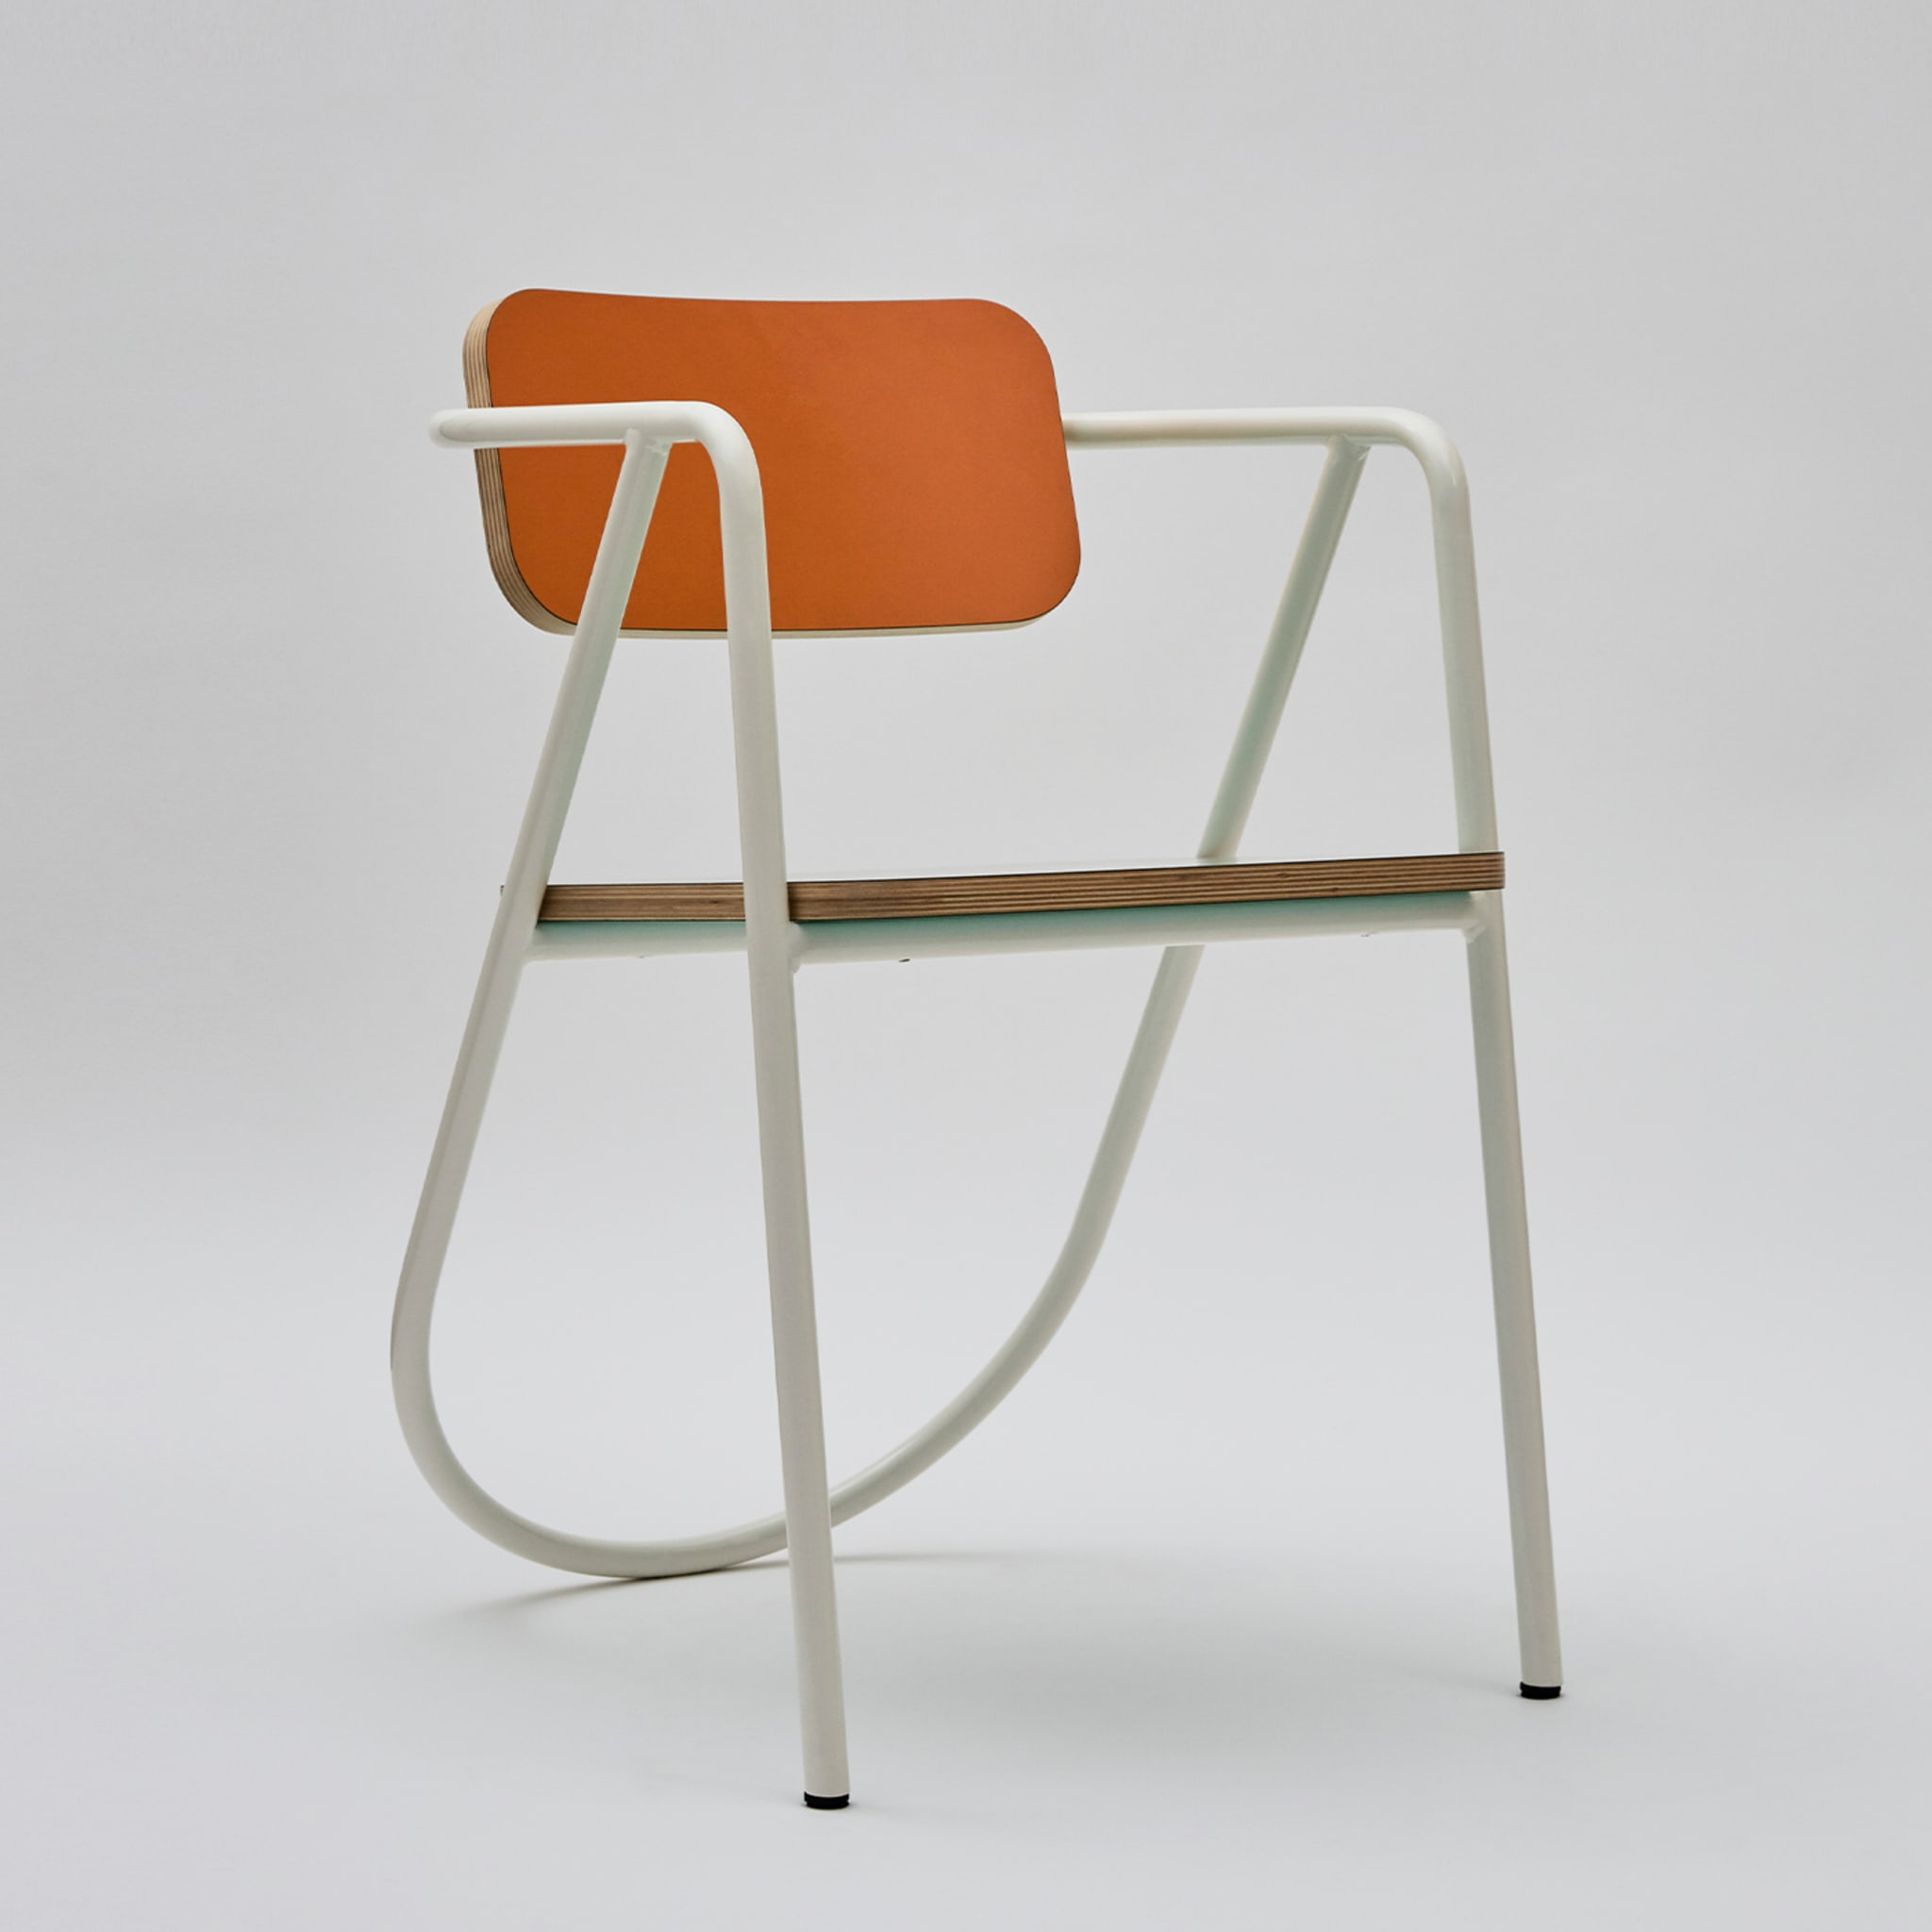 La Misciù White/Teal/Orange Chair  - Alternative view 2